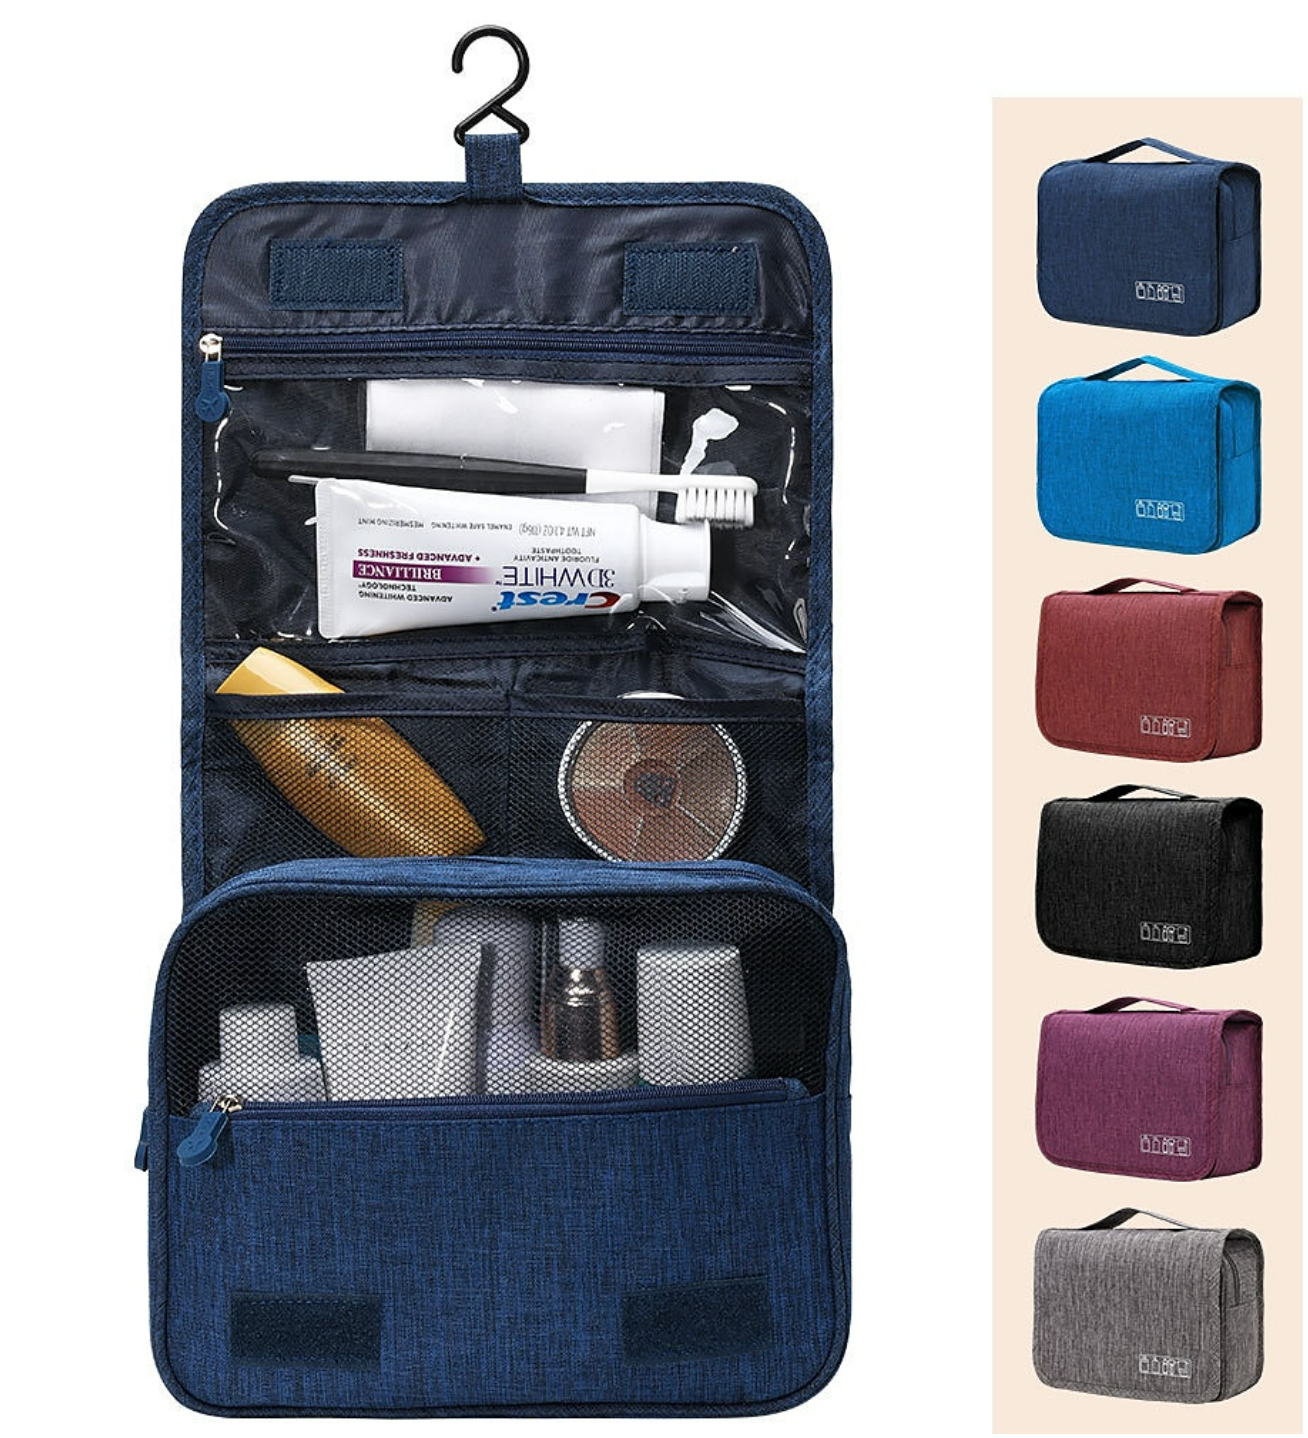 New Portable Cosmetic And Wash Bag Travel Large Capacity Hanging Storage Bag Multi Color Wash Bag